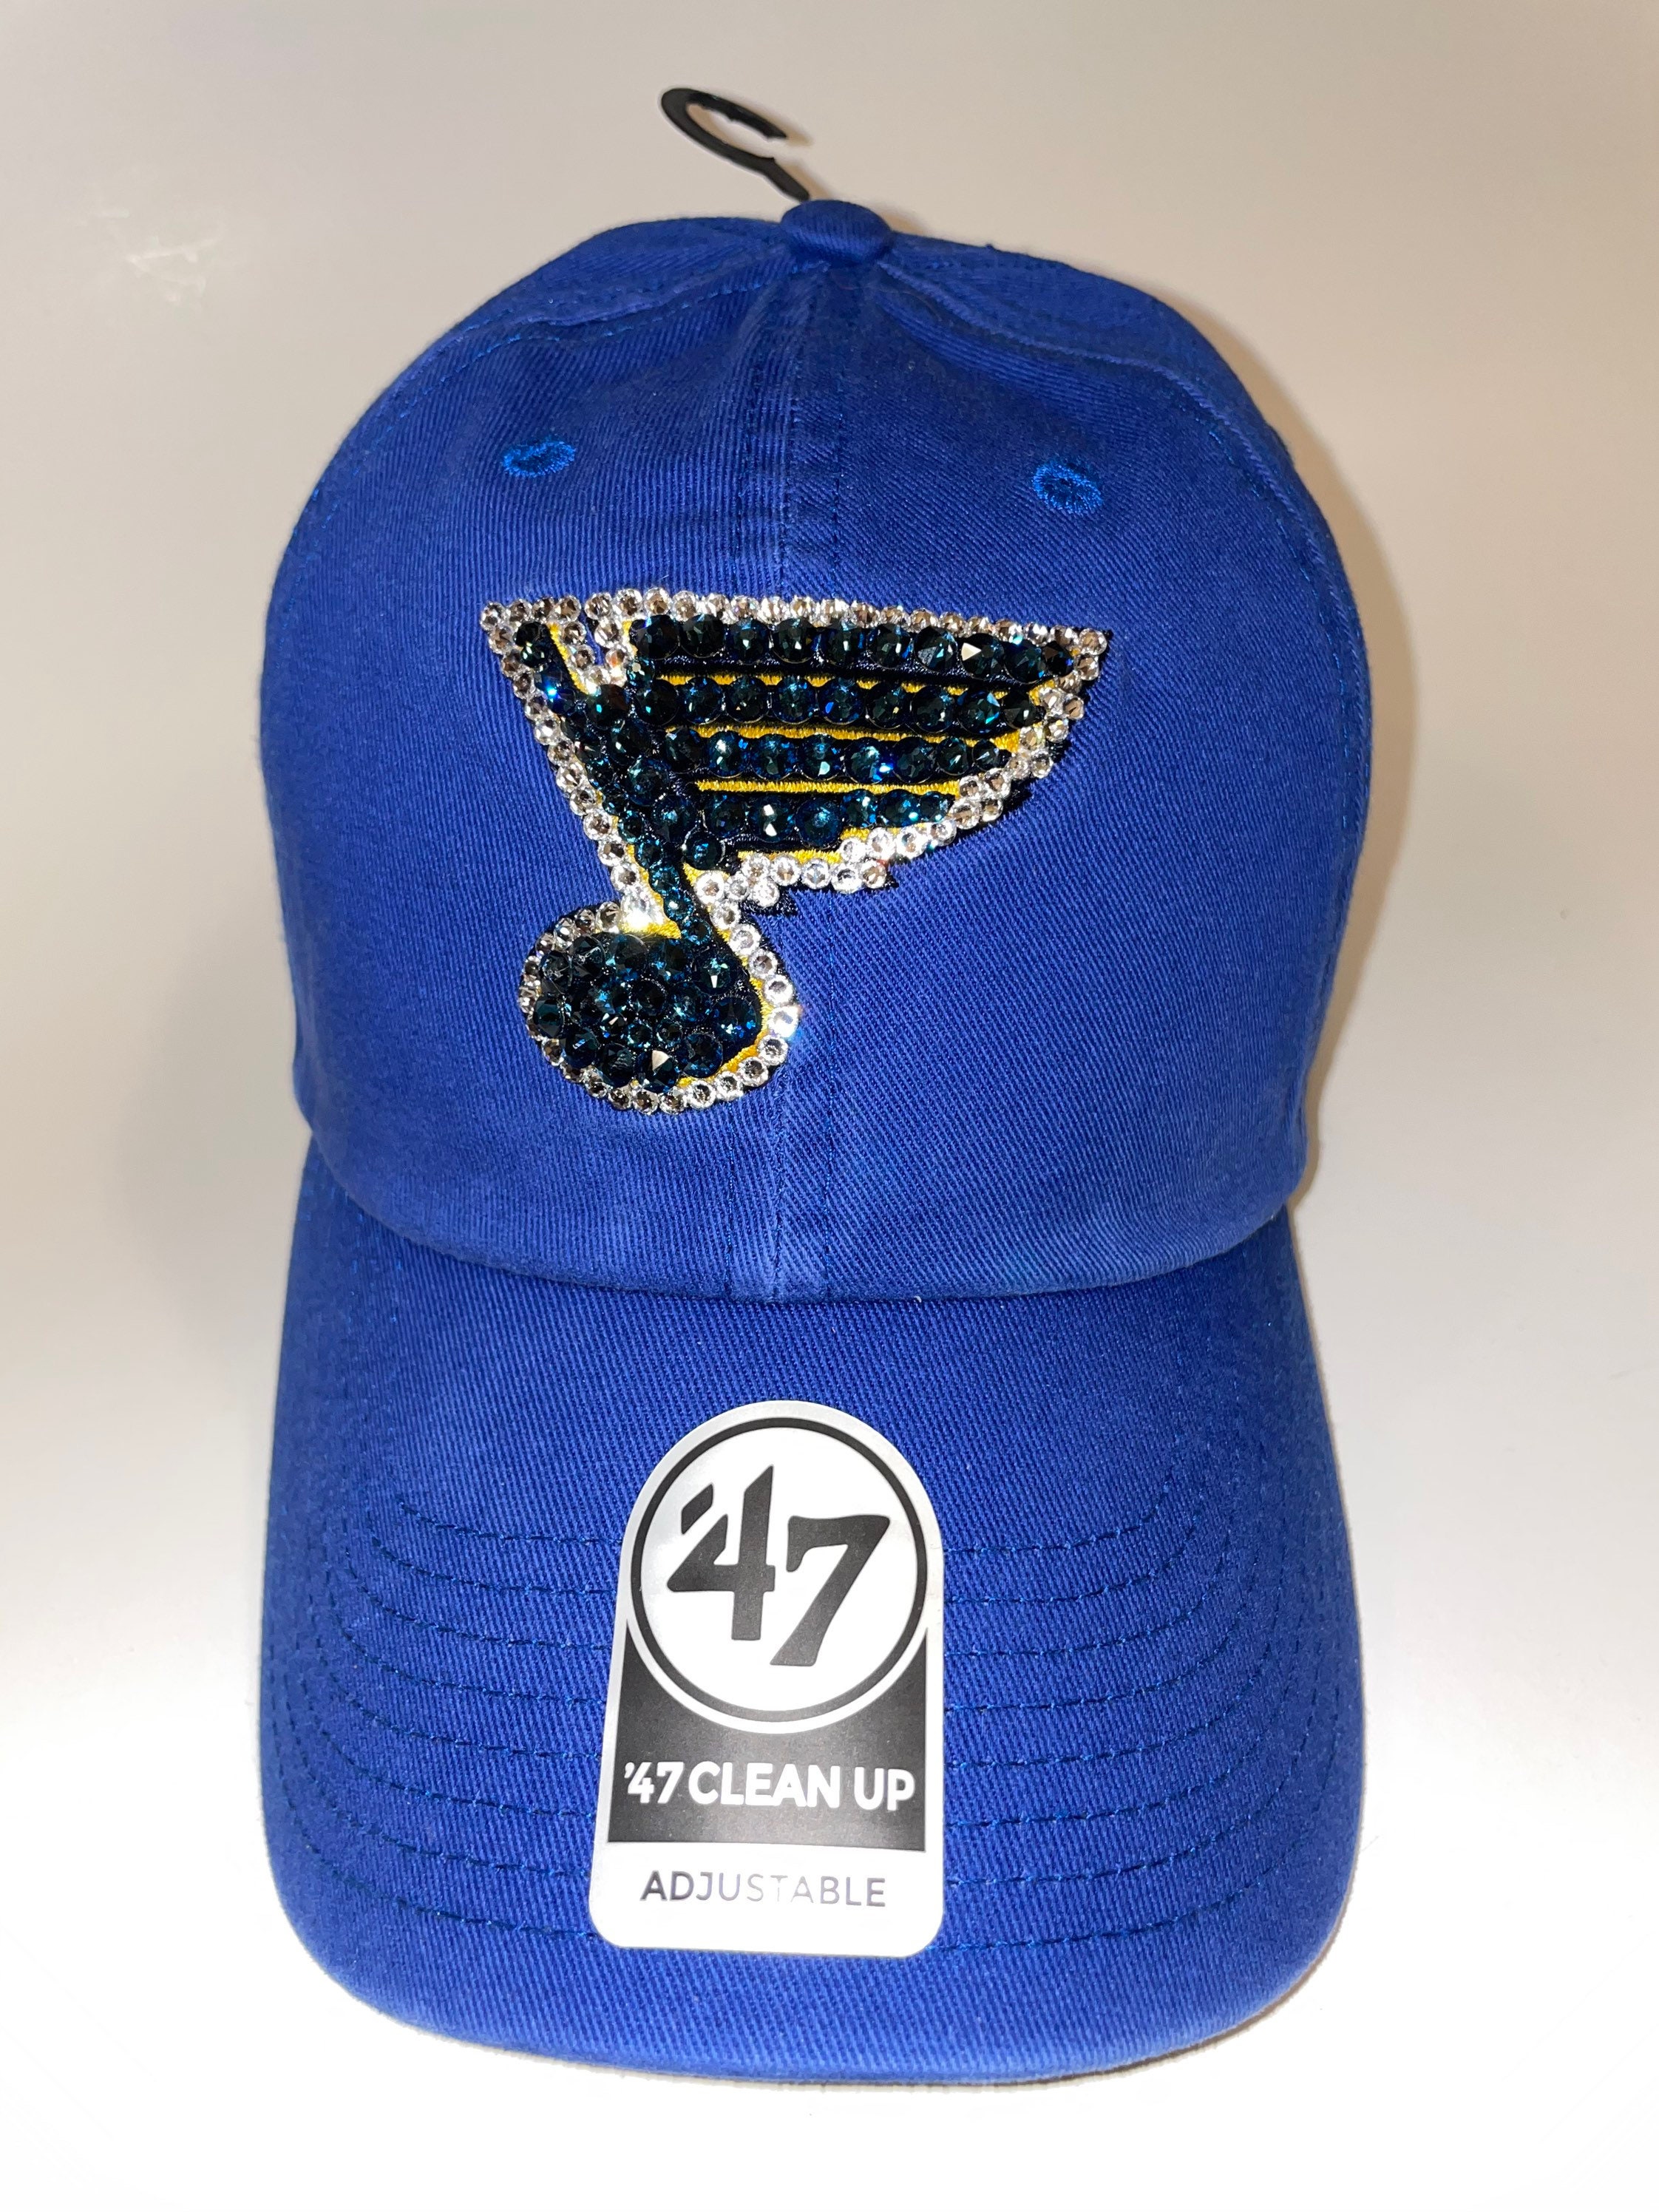 Swarovski crystal bling St. Louis Blues adjustable hat | Etsy